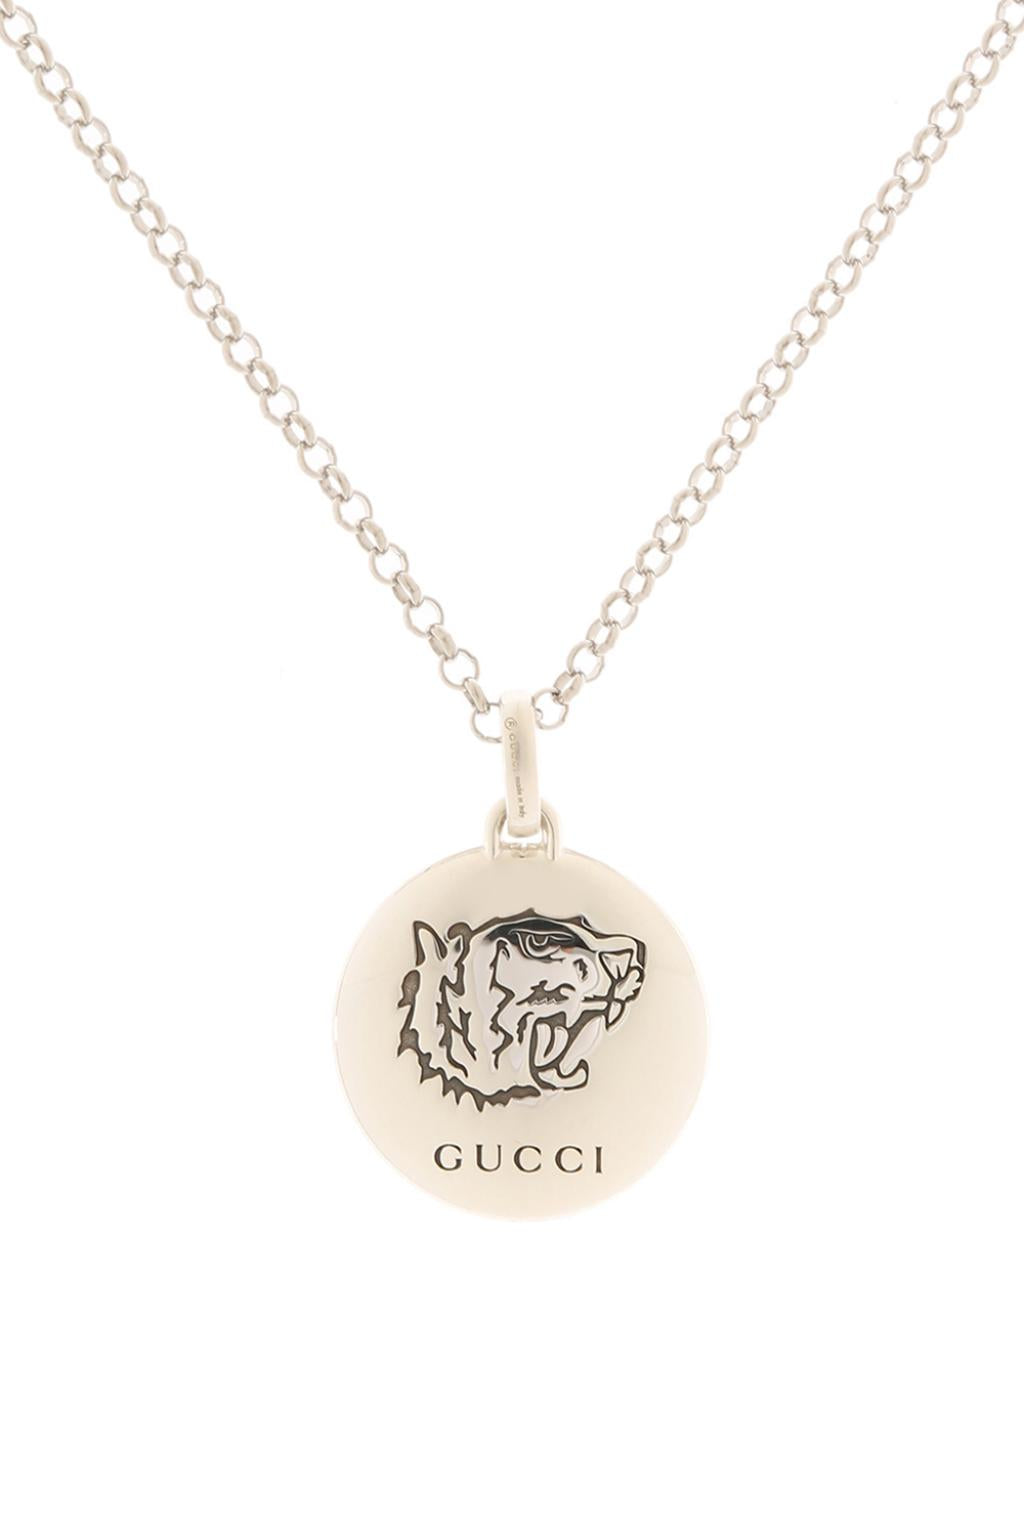 GUCCI Necklace Blind for Love Heart Pendant Logo Silver Accessory | eBay